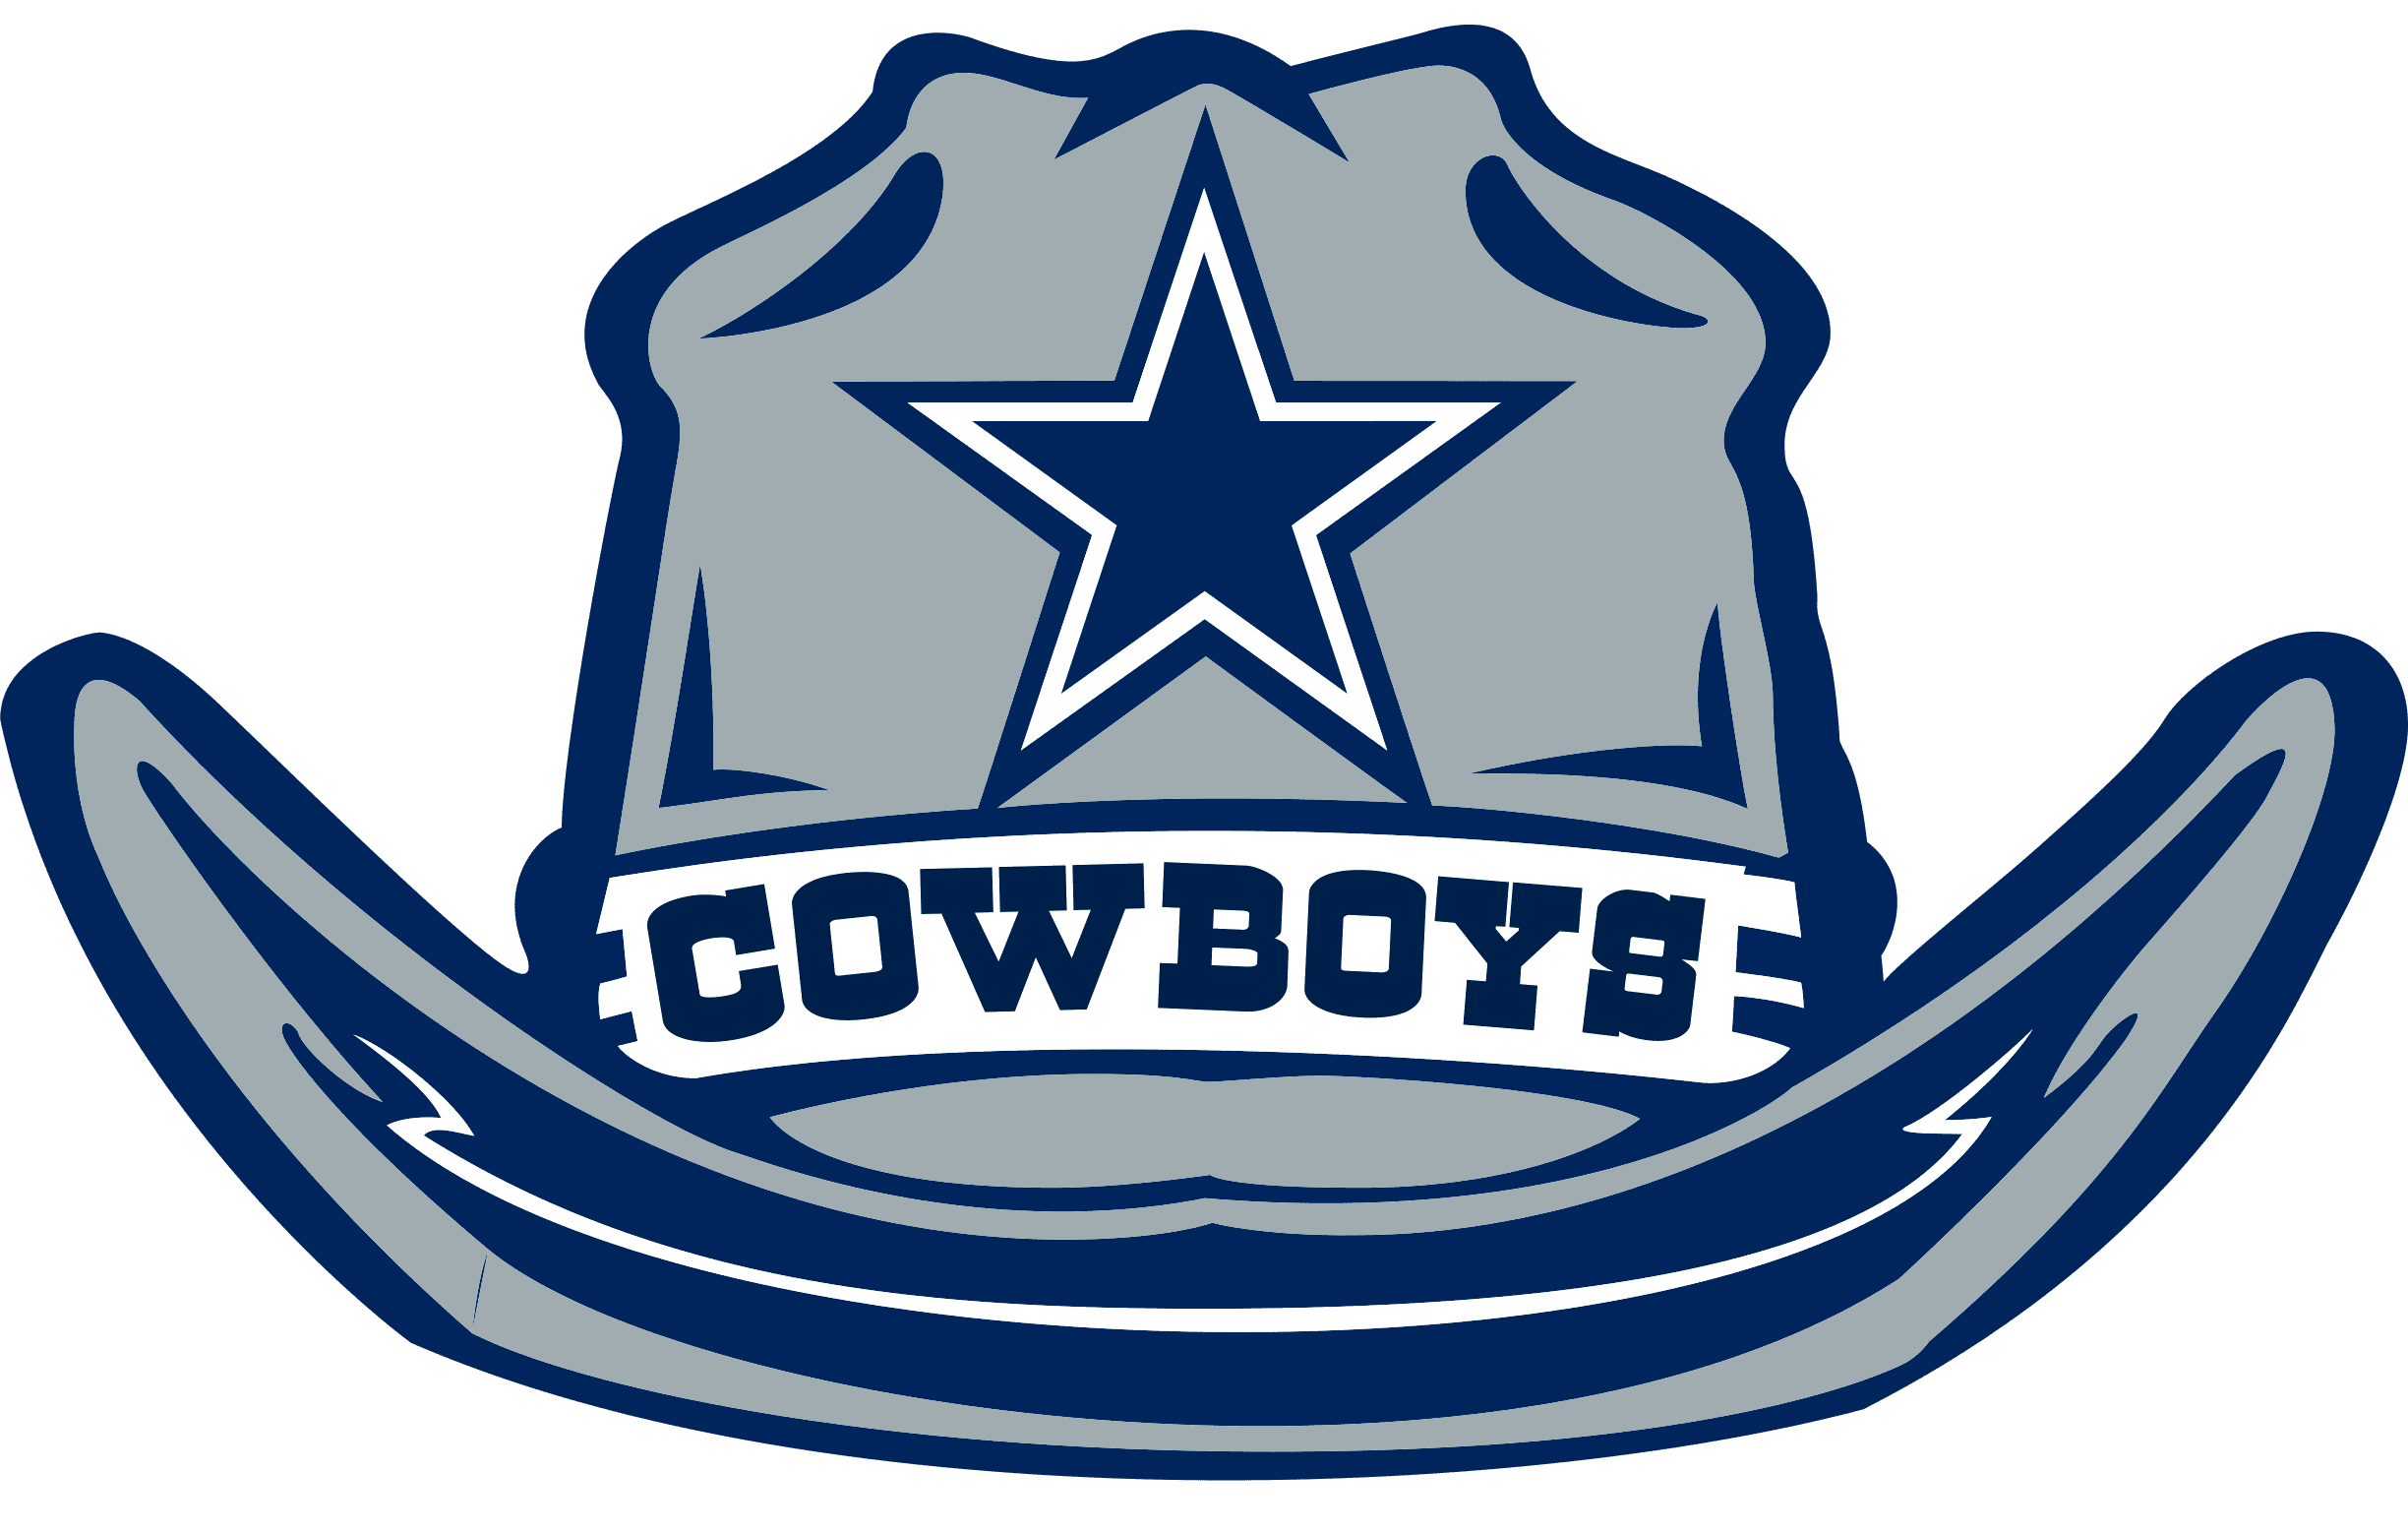 Dallas Cowboys Logo clipart free image download - Clip Art Library